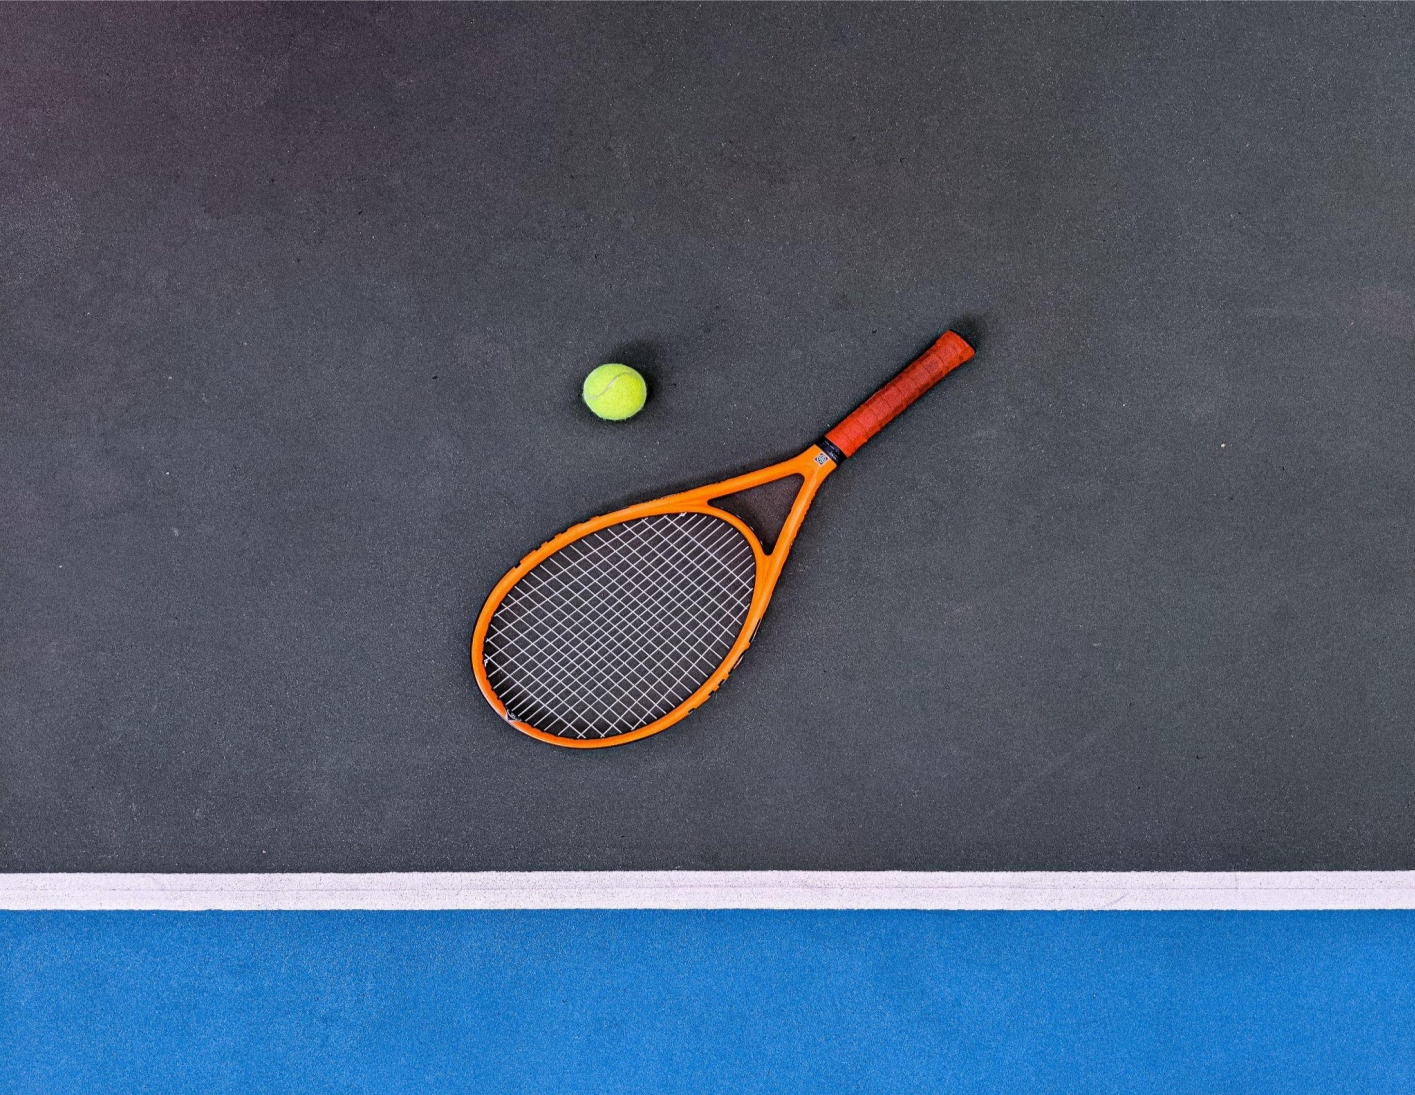  Tennis racquet and ball in a court